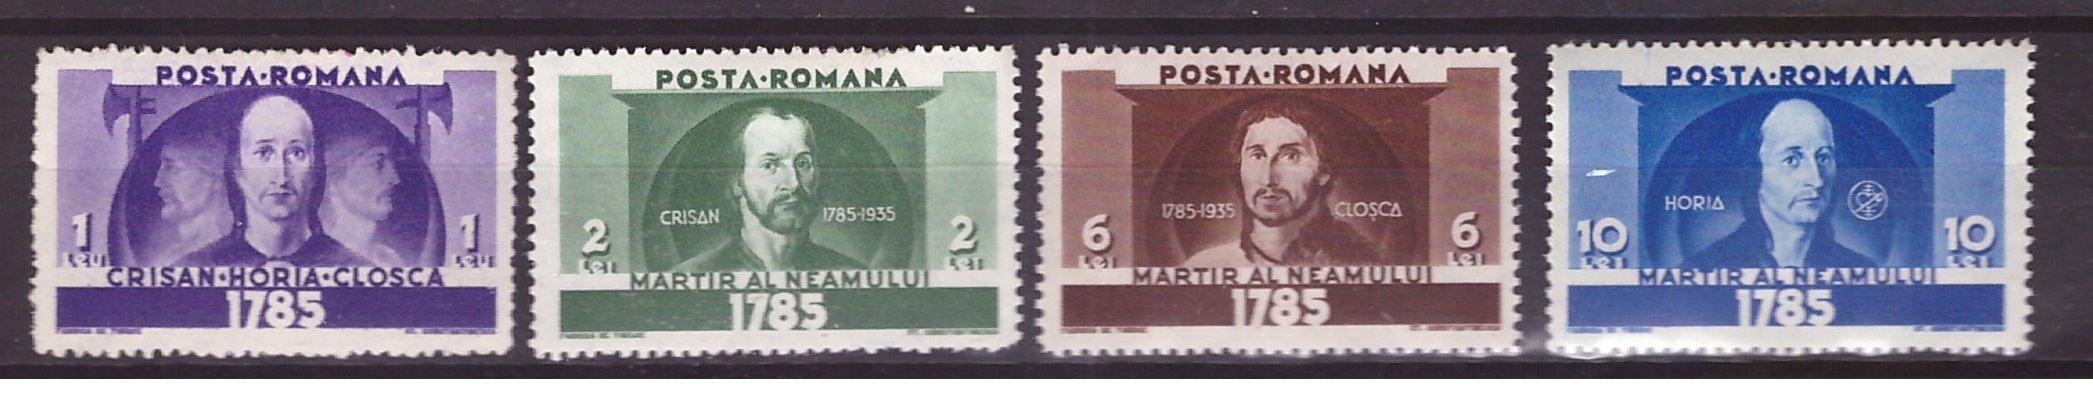 1935 - Horia, Closca si Crisan, serie nestampilata cu sarniere